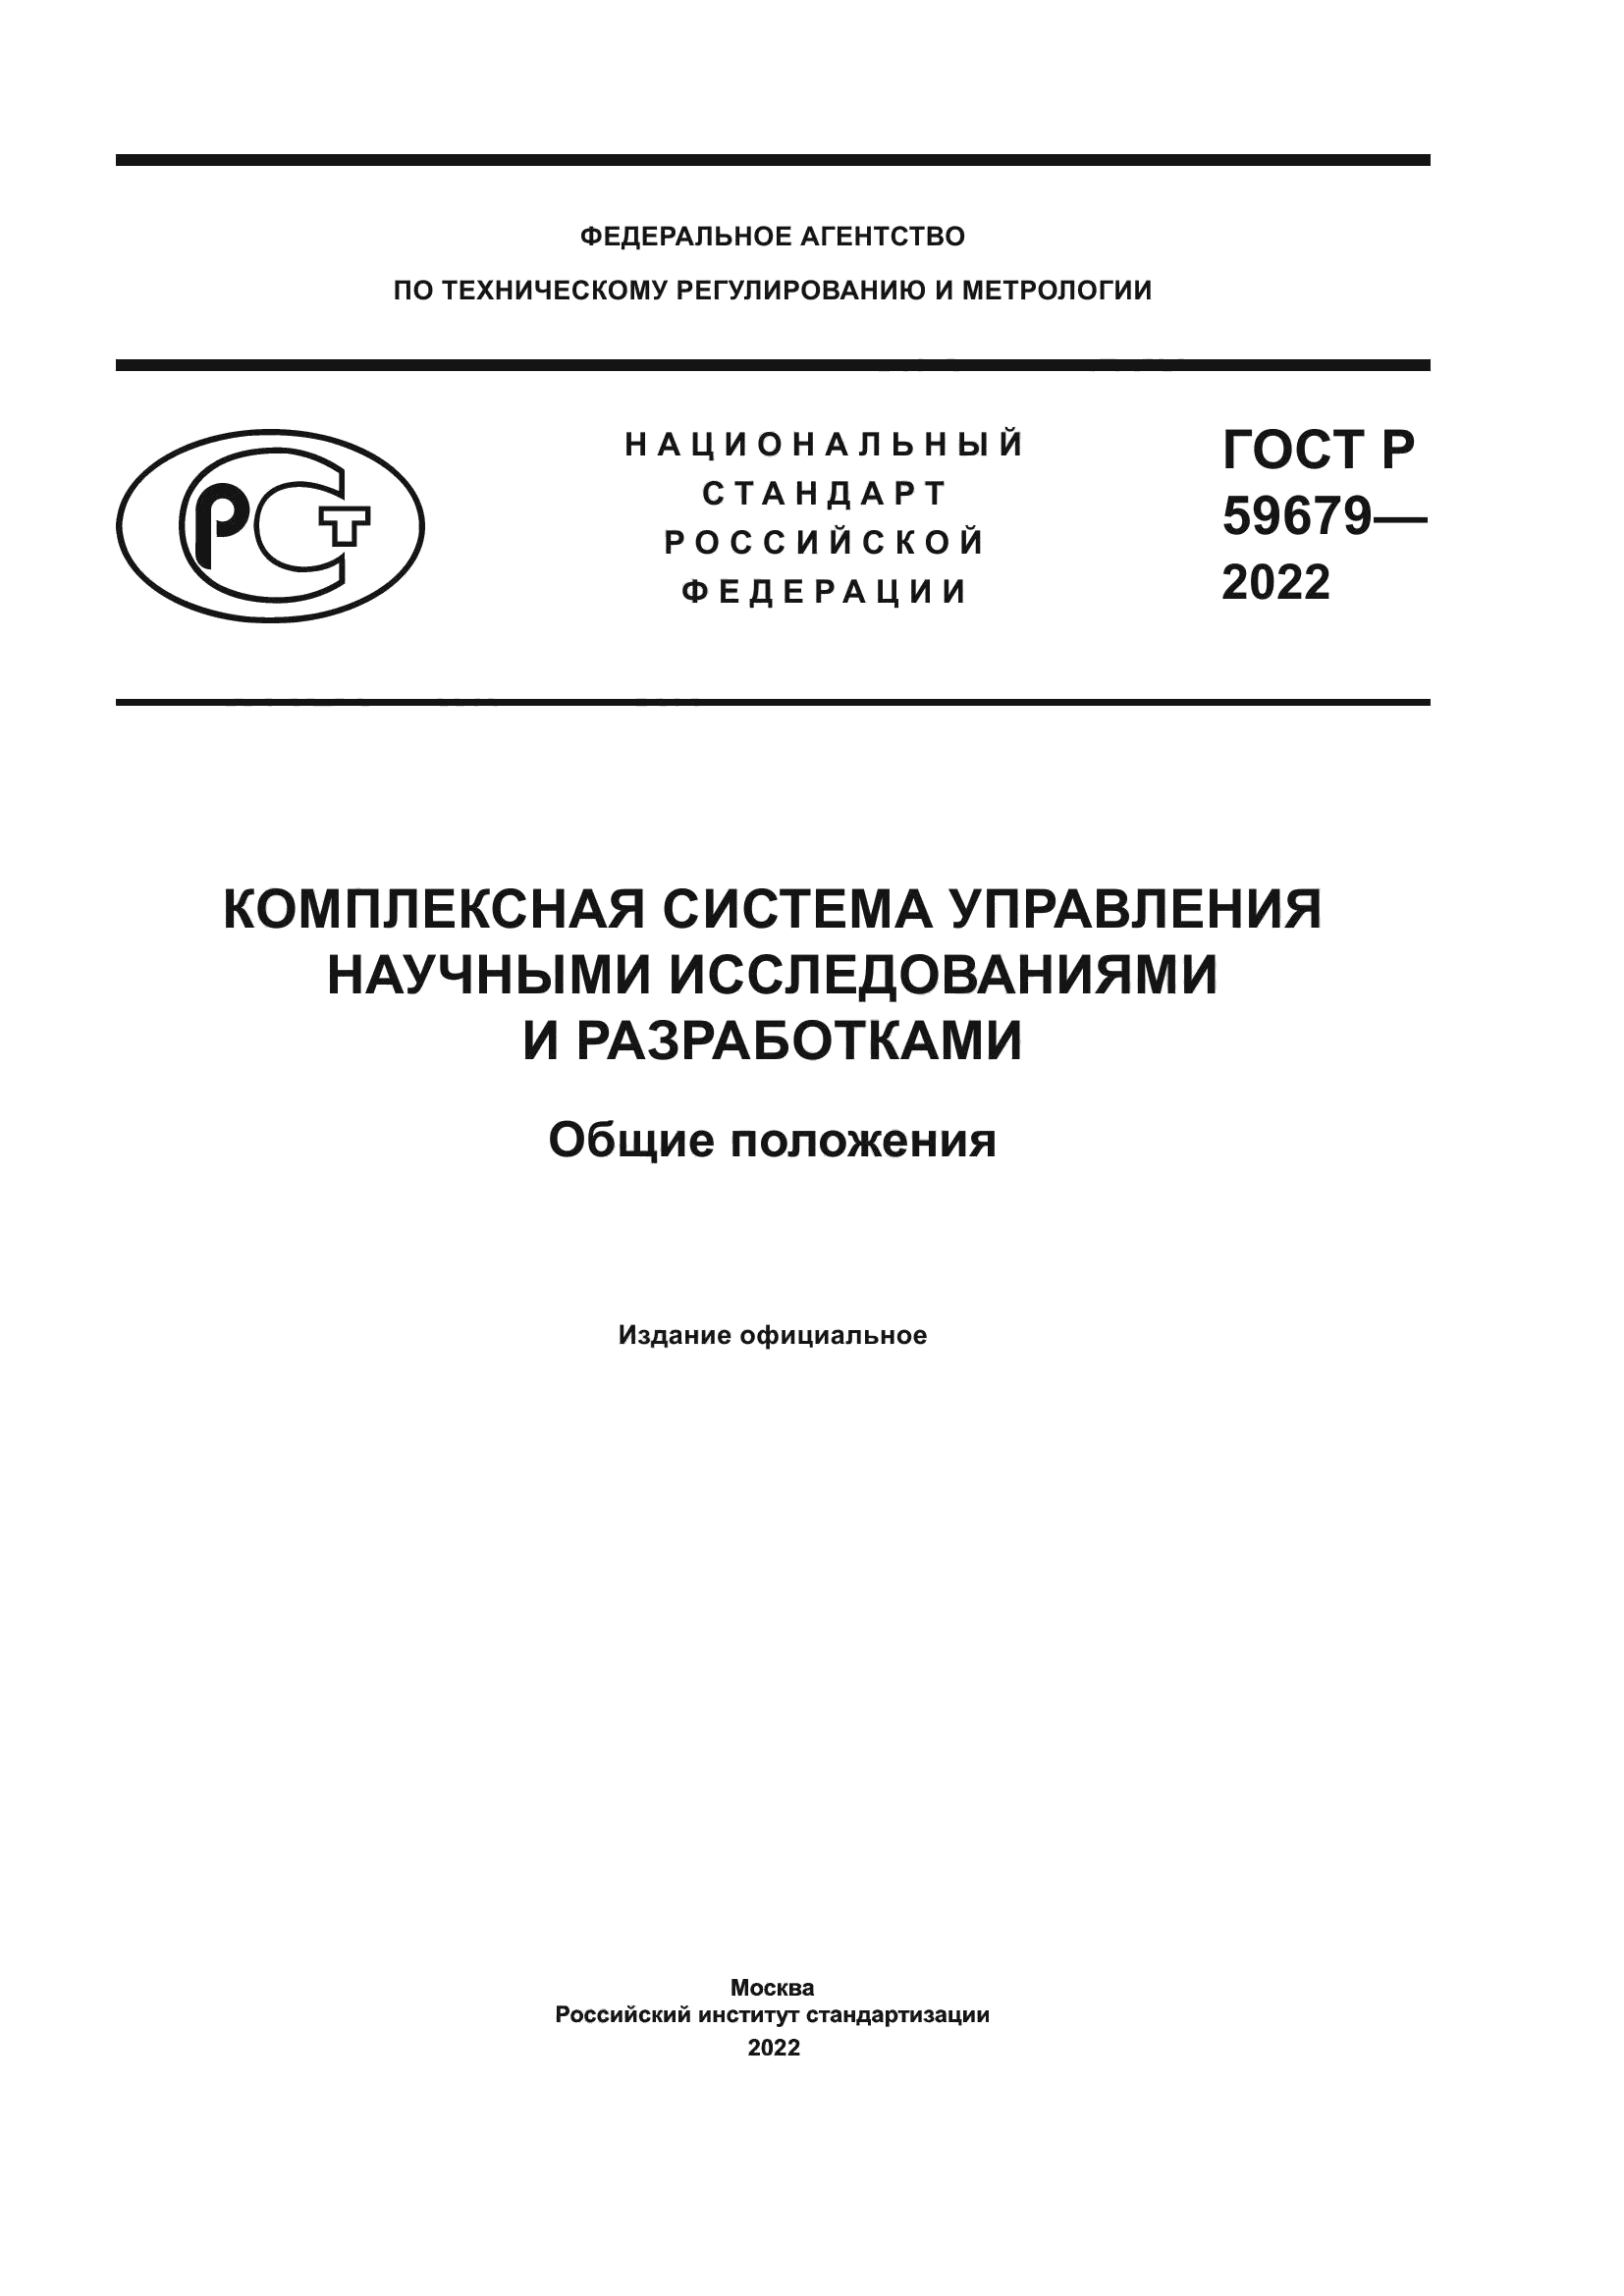 ГОСТ Р 59679-2022